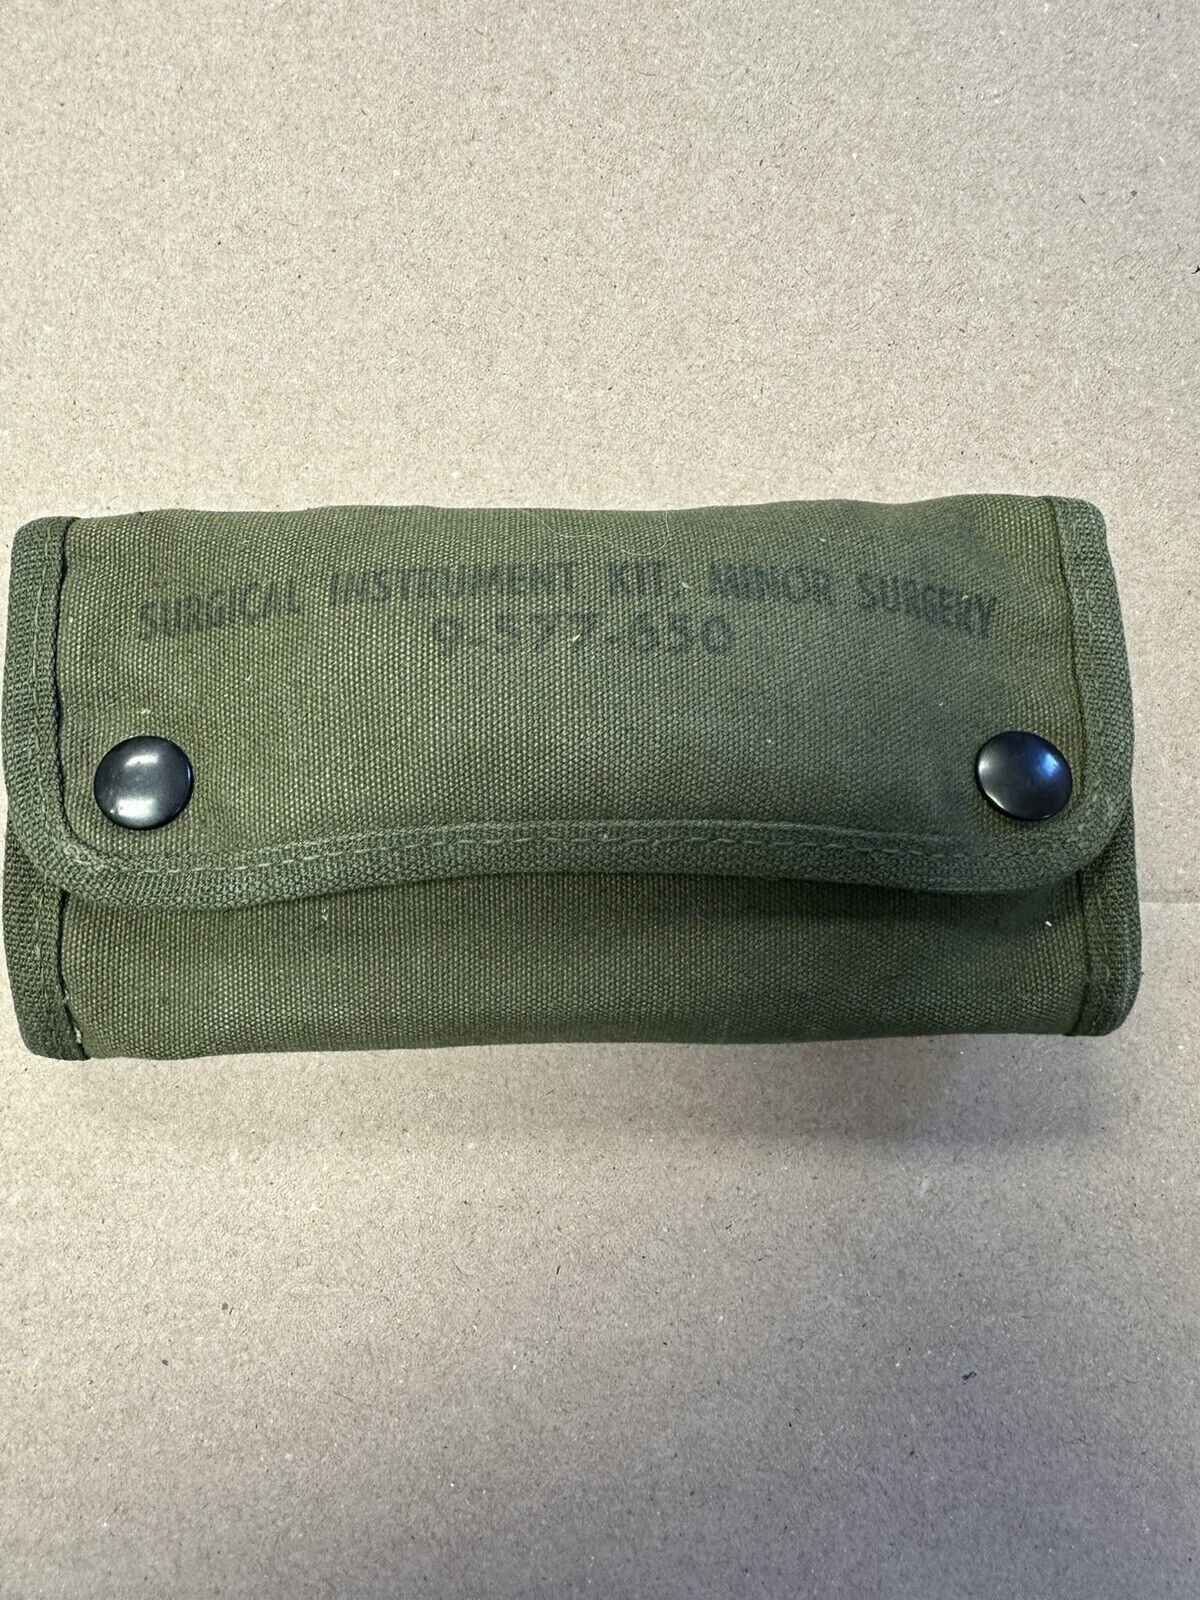 WWII US Original Edward Weck & Company 9-577-650 Minor Surgery Kit NICE